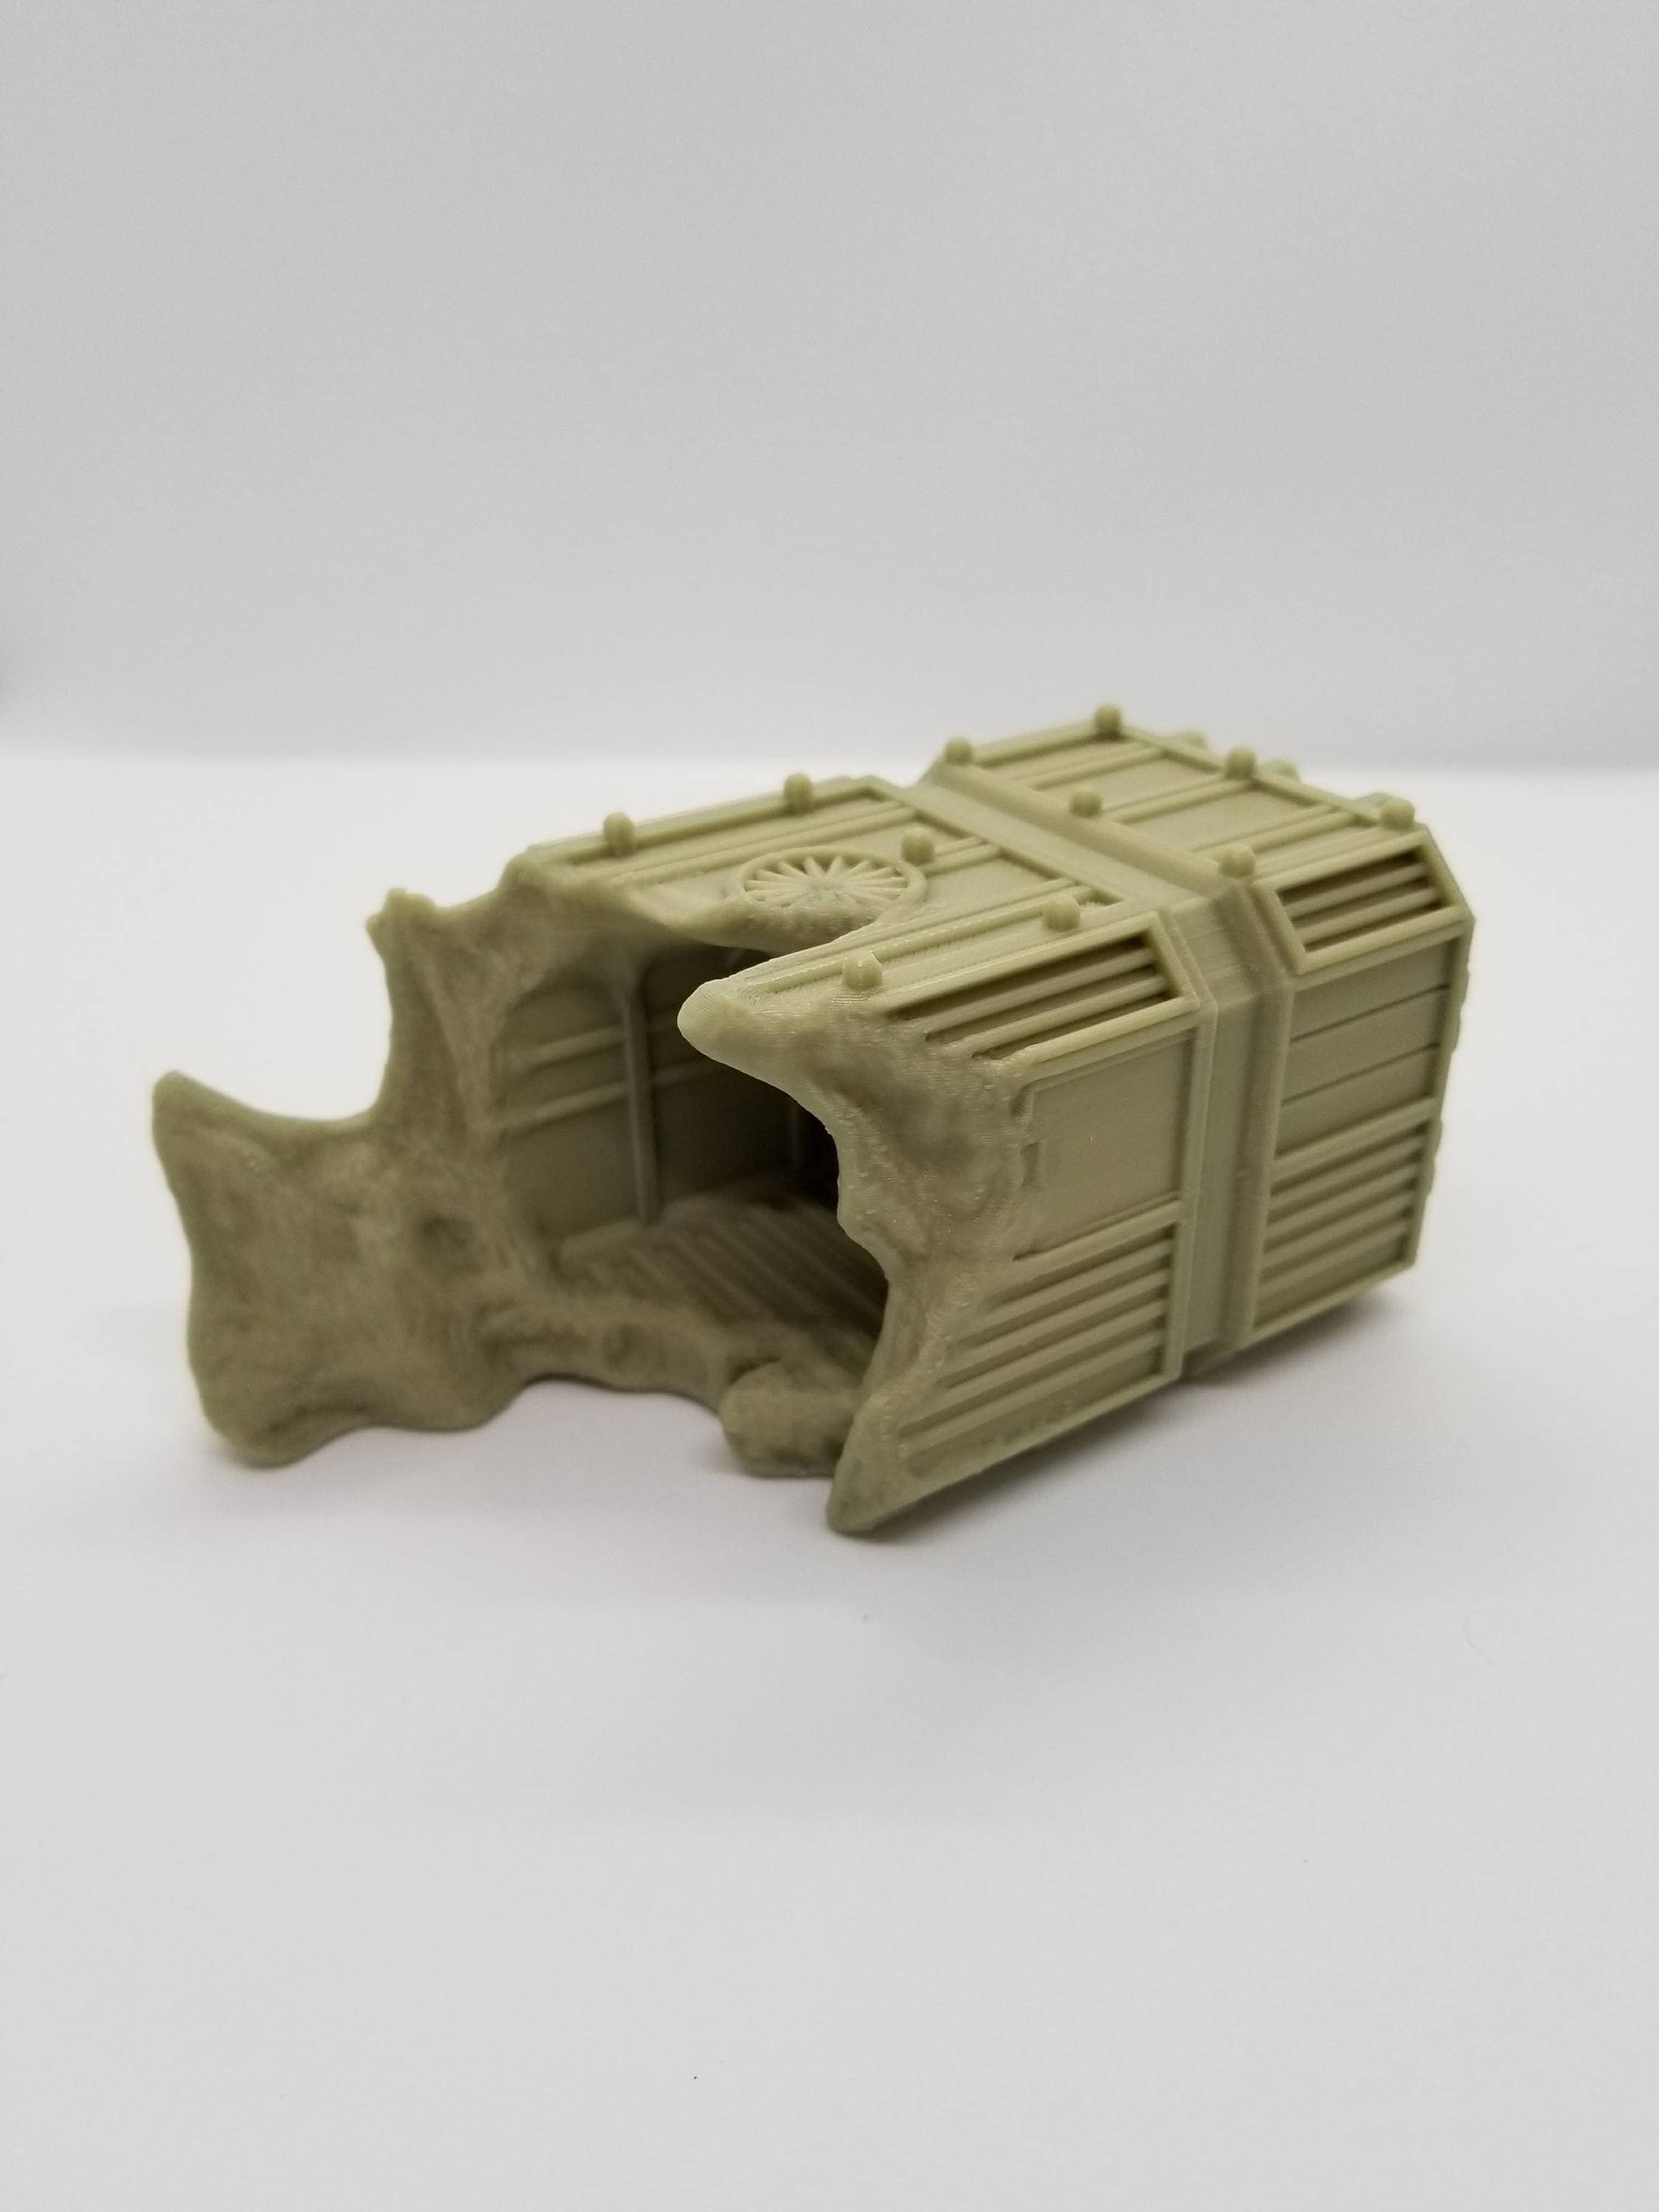 Warlayer / 3d Printed Sci-Fi Ruined Crate / 28mm Wargaming Terrain / Print to Order / Licensed Printer